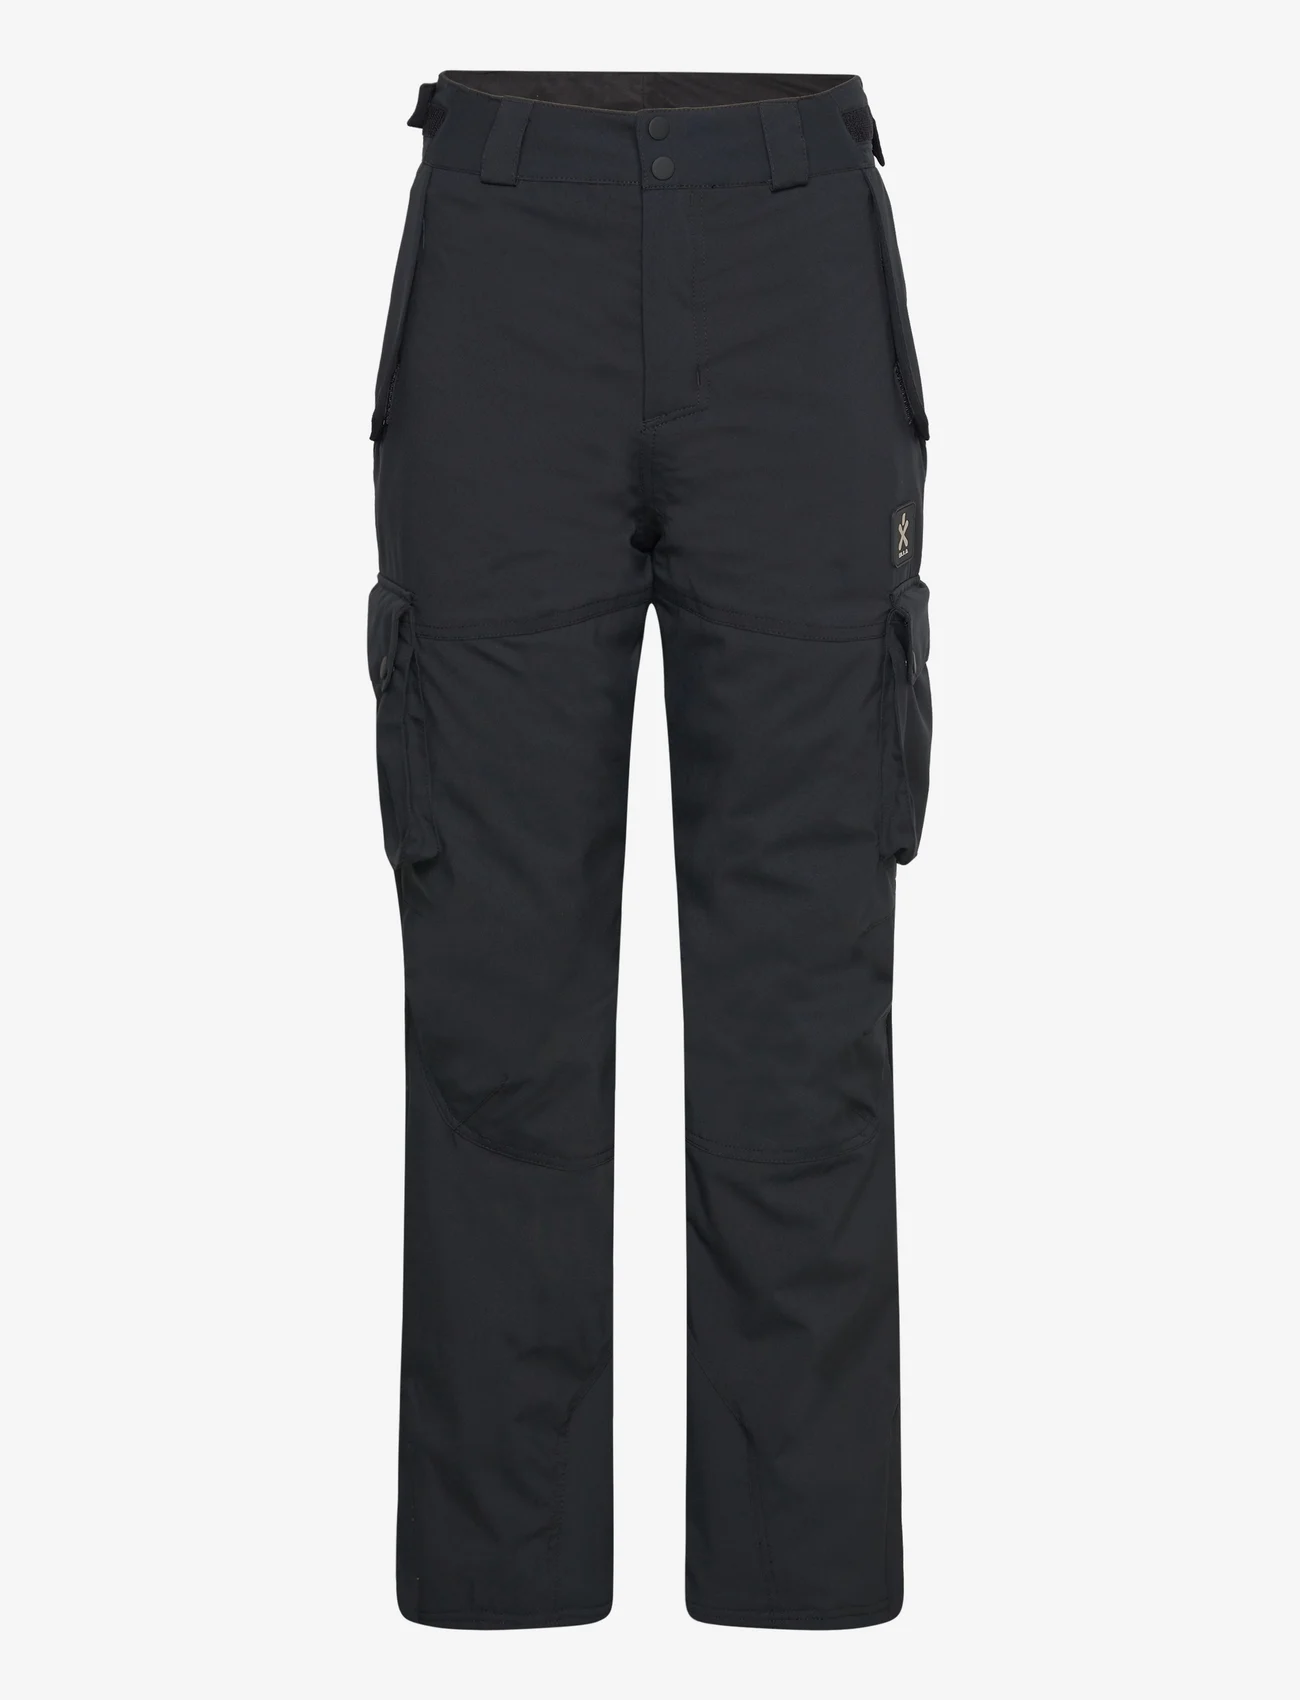 Bula - Liftie Insulated Pant - skihosen - black - 0